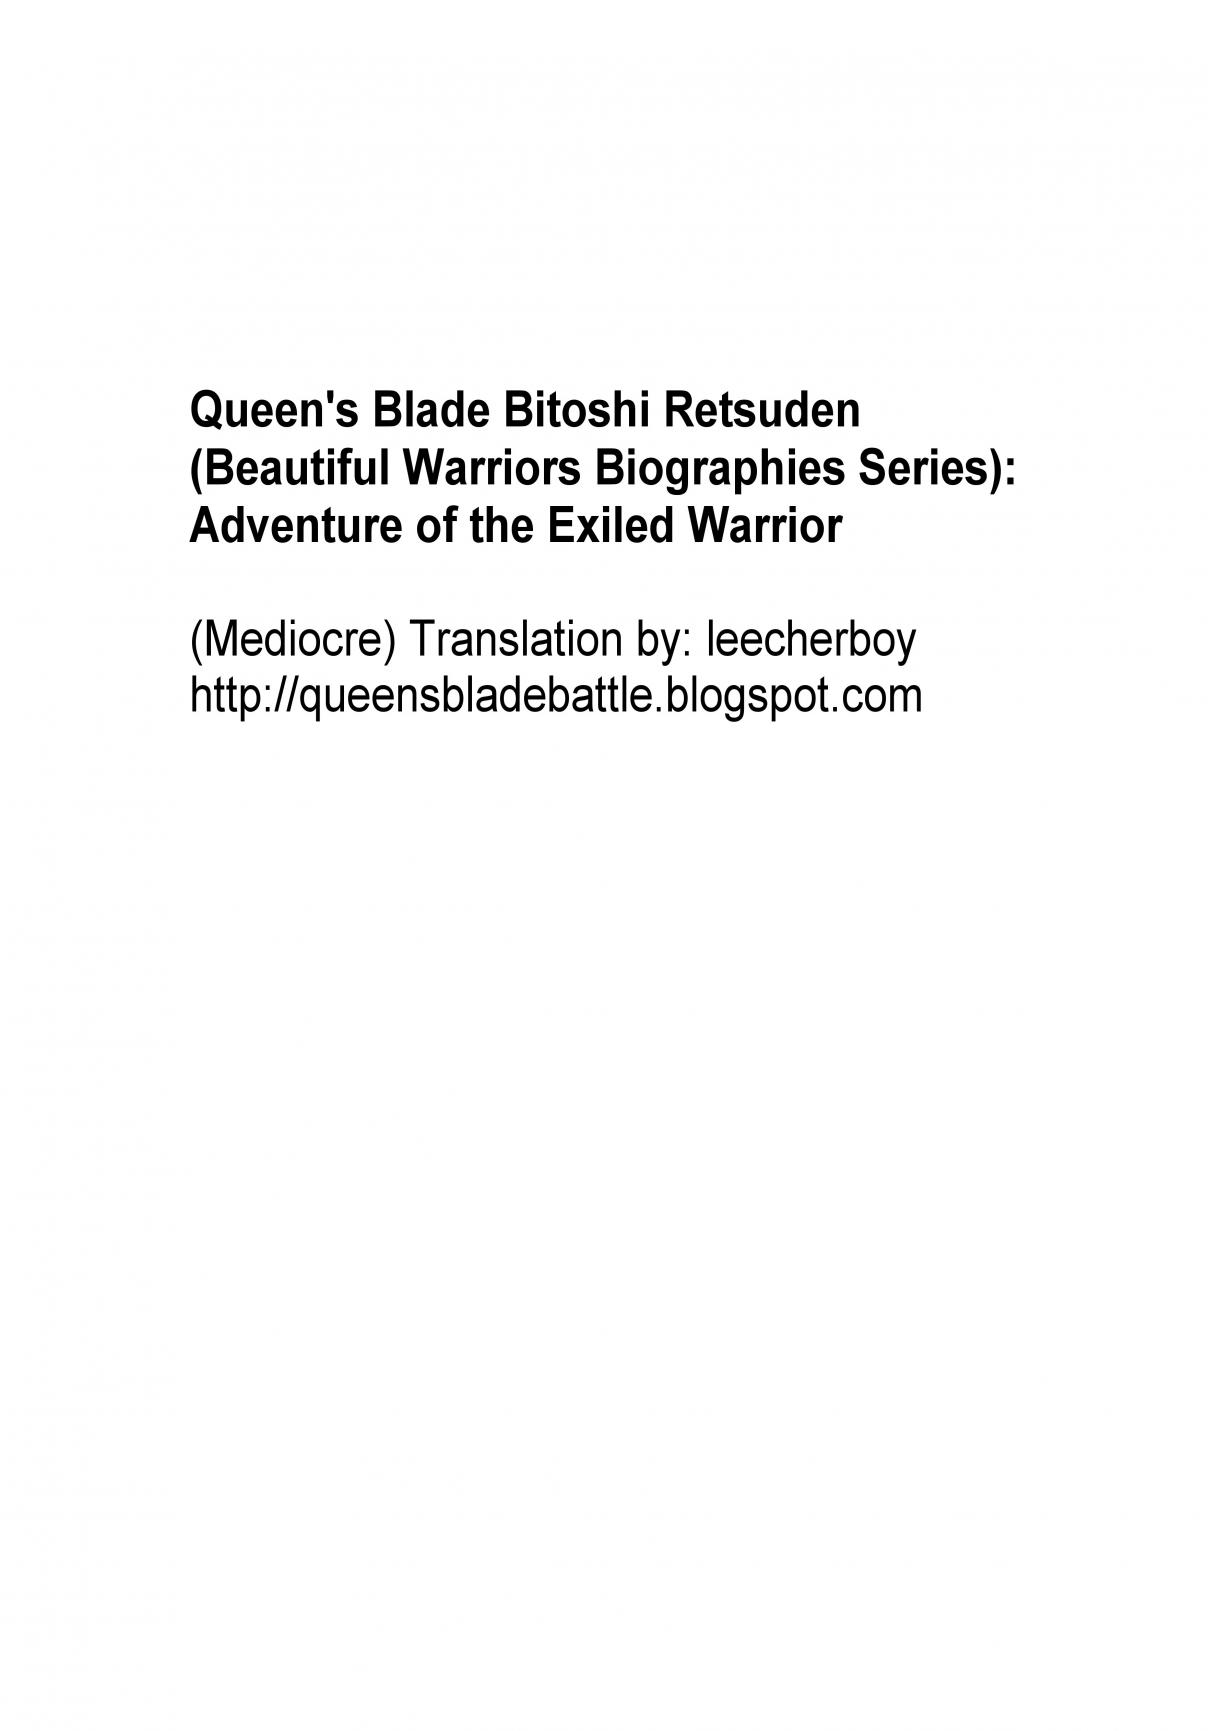 Queen's Blade Bitoshi Gaiden Ch. 3 Adventure of the Vangrant Warrior